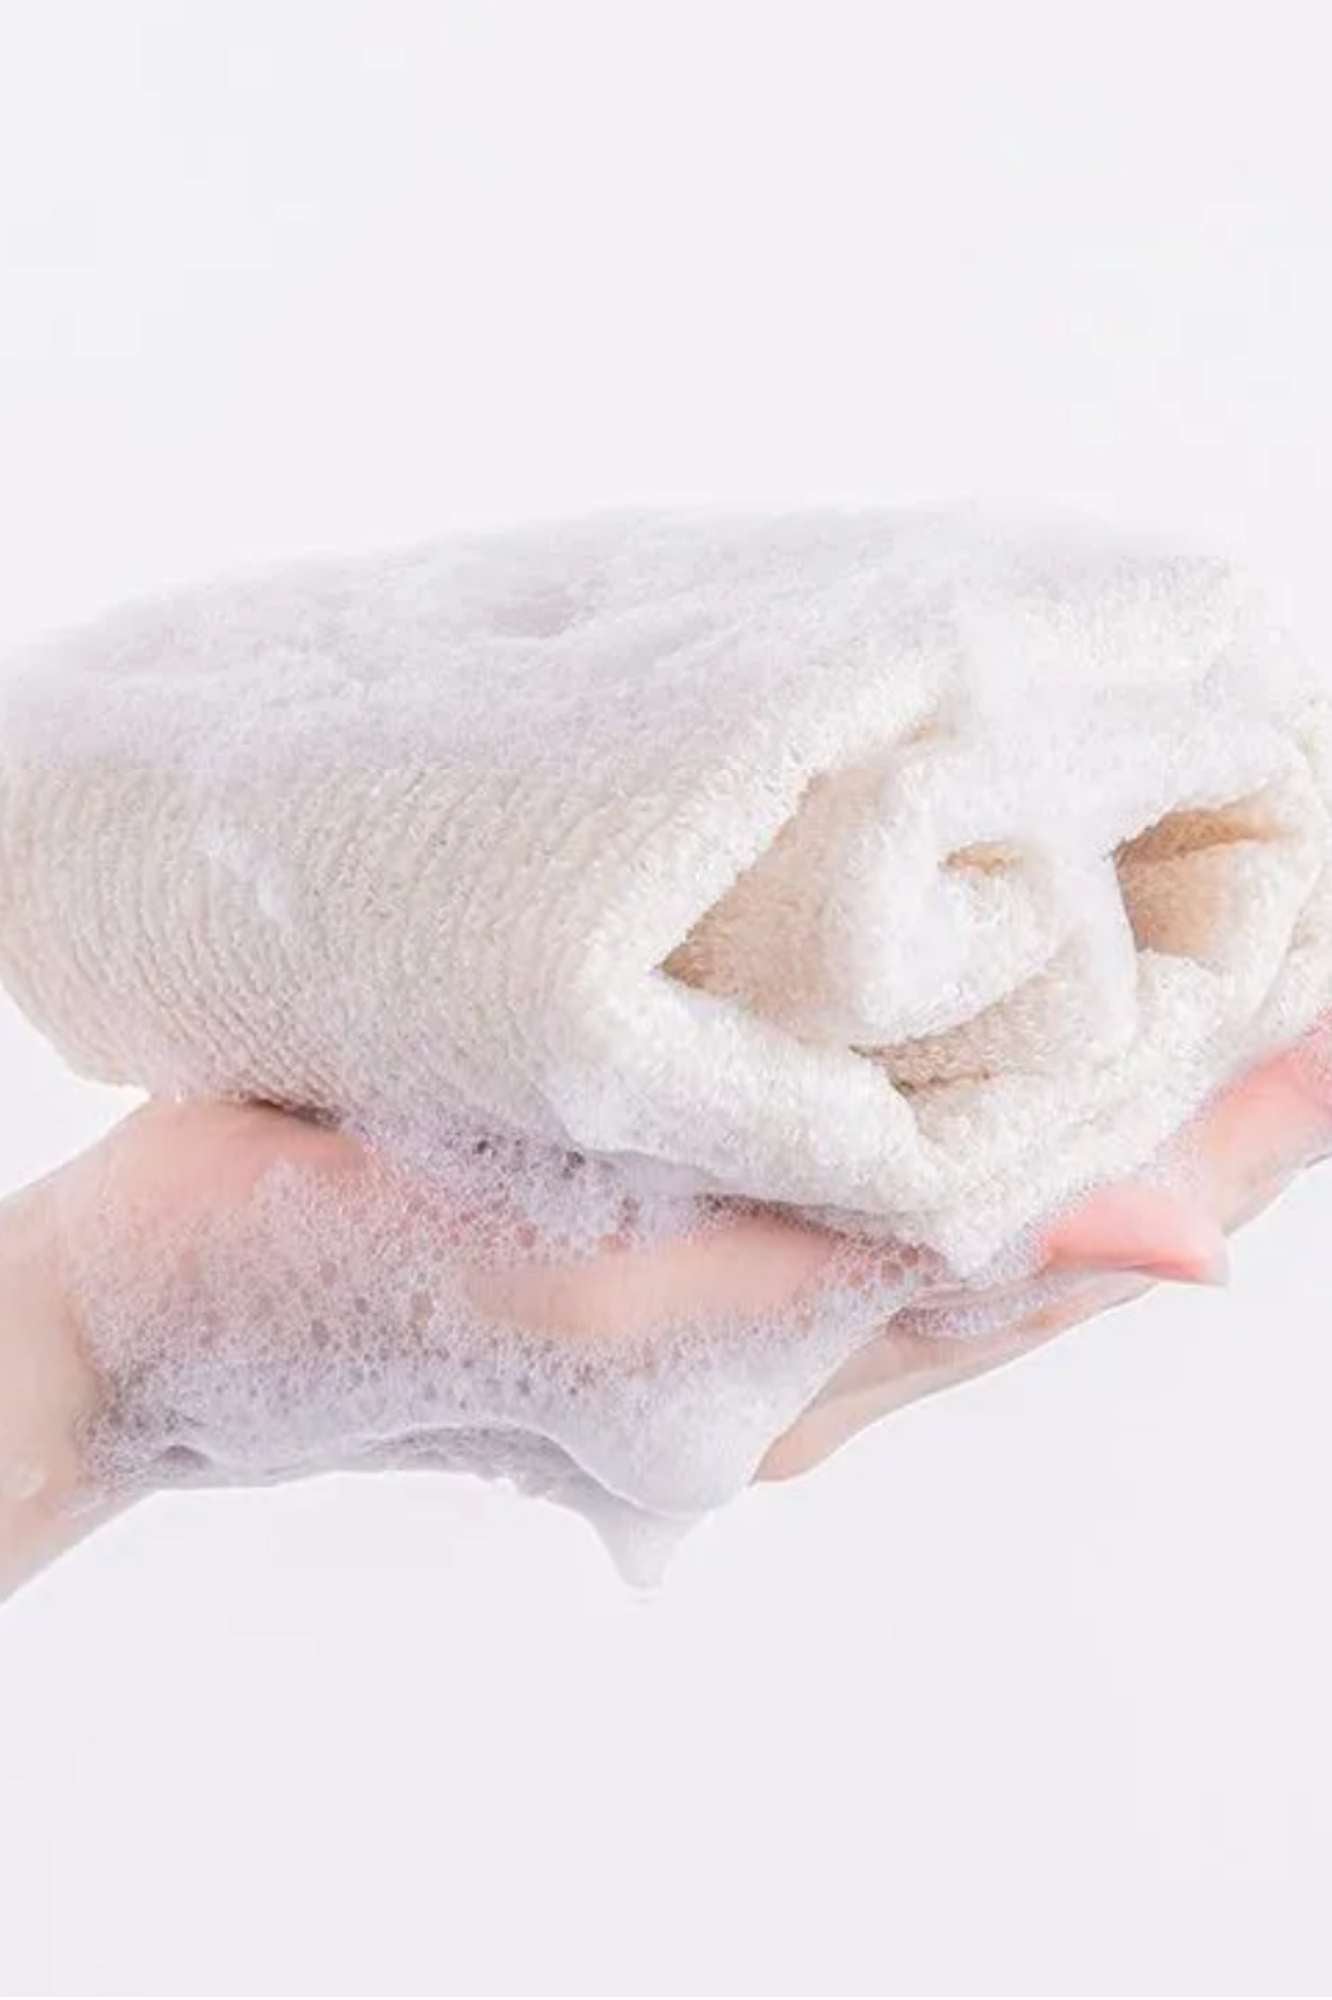 Hanji body wash towel by Benton